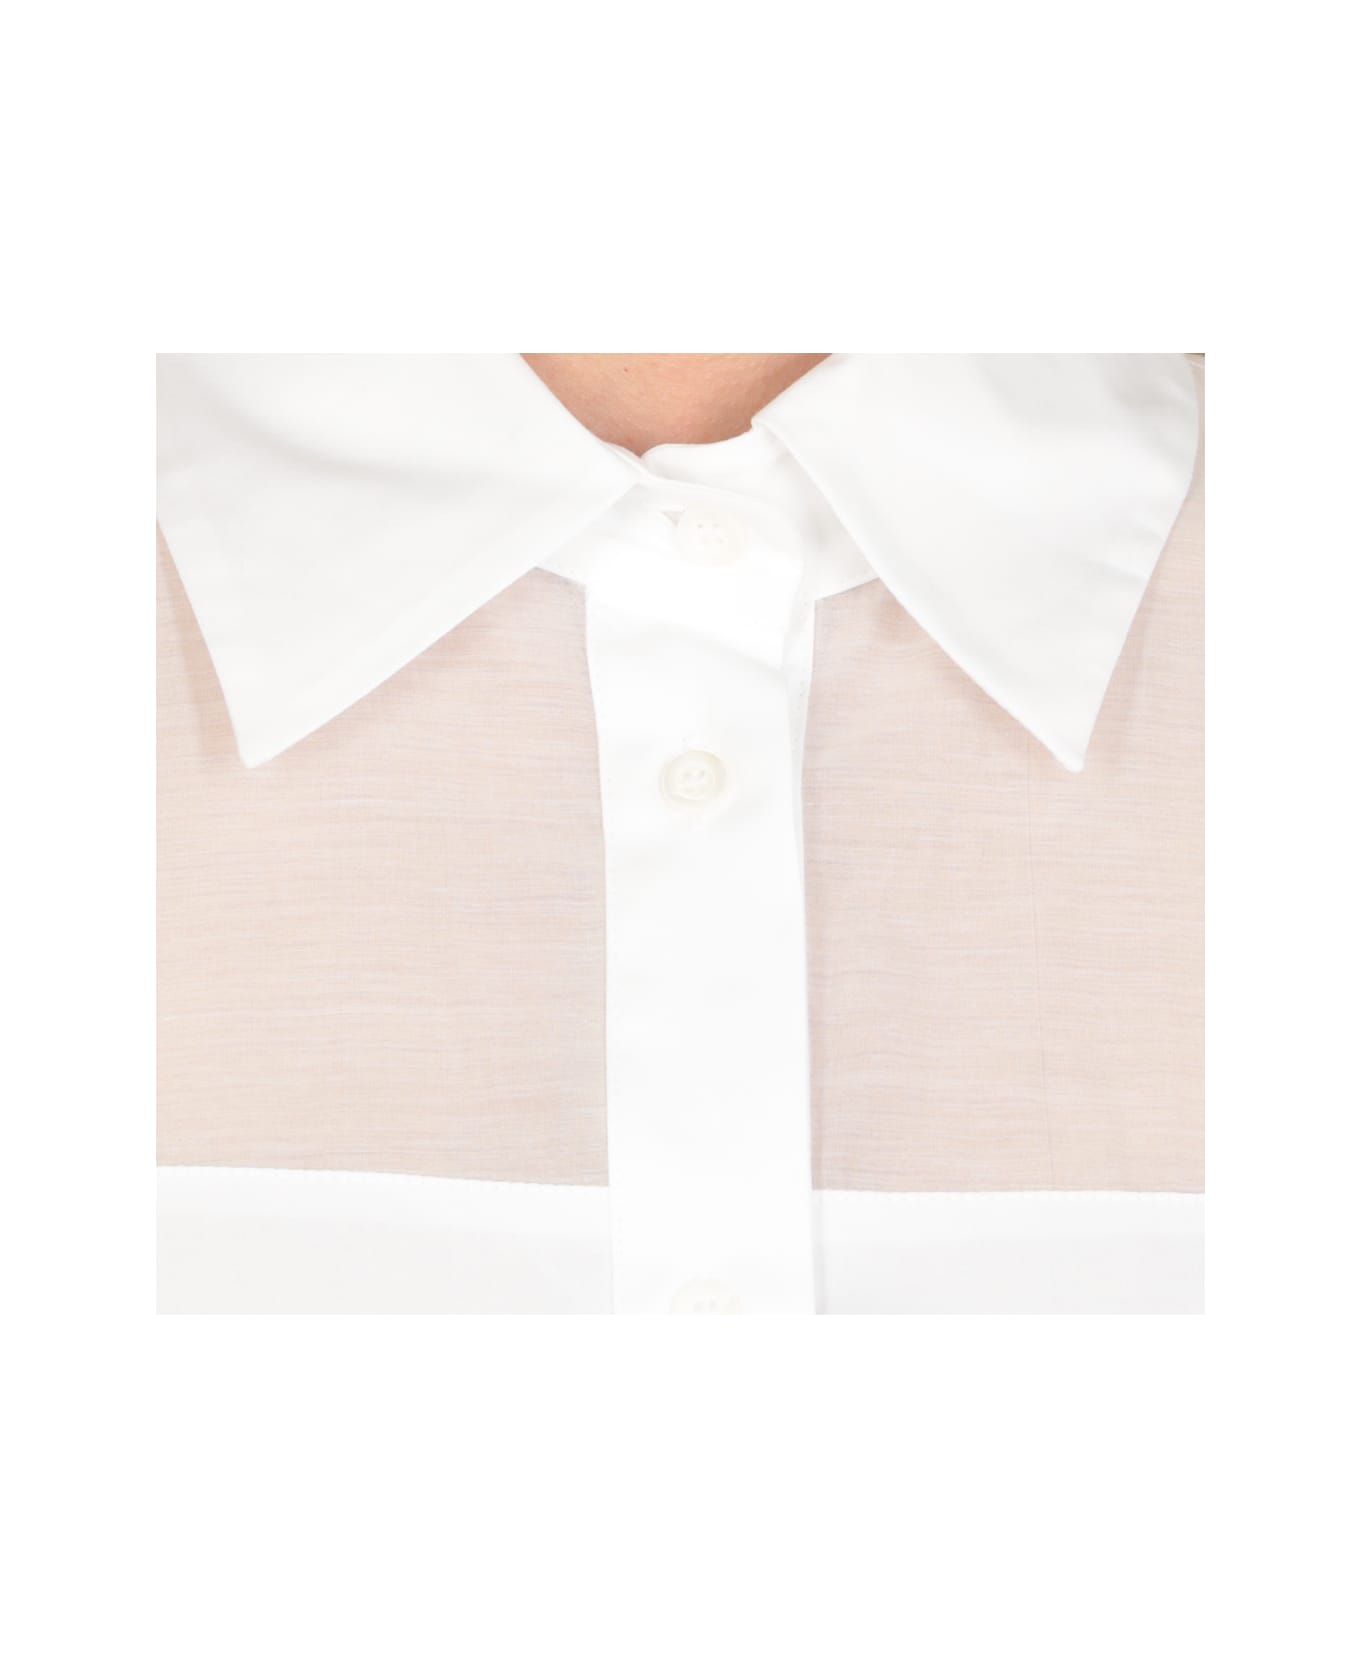 Peserico Cotton Shirt - White シャツ